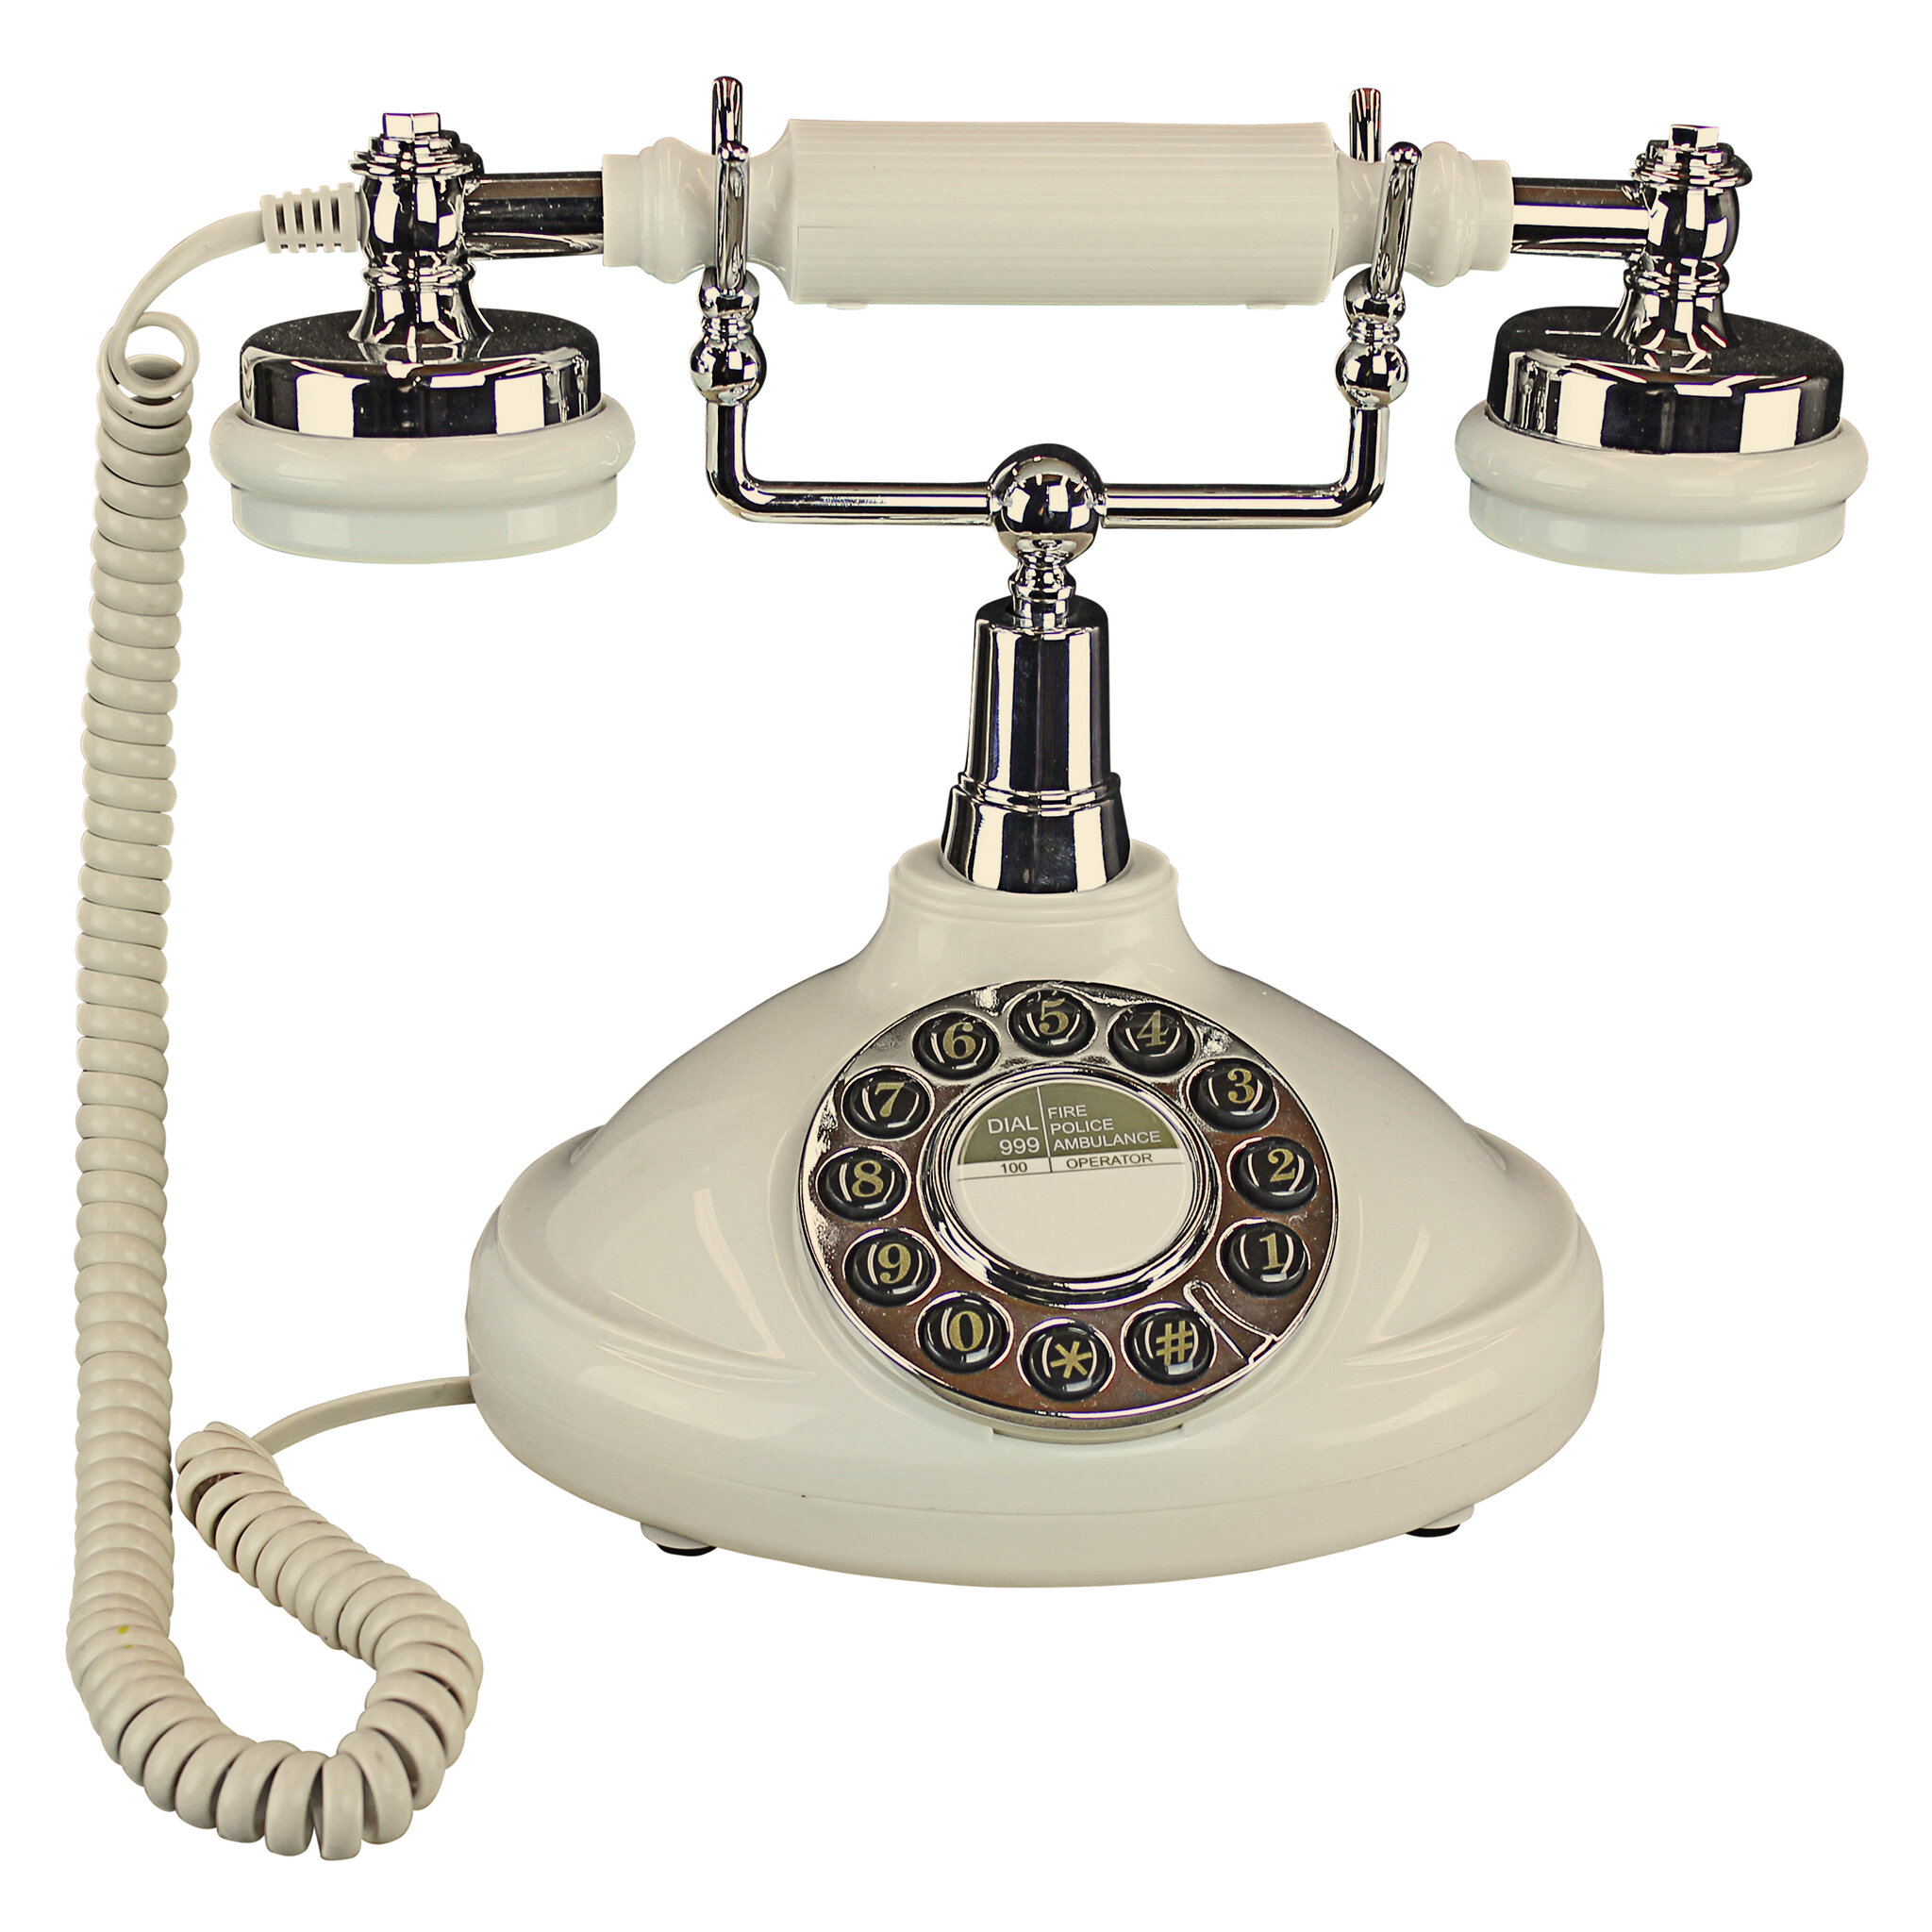 Retro Design Desk Phone Vintage Decorative Telephone Vintage Antique Corded  Landline Phone Home Office Telephone (F)